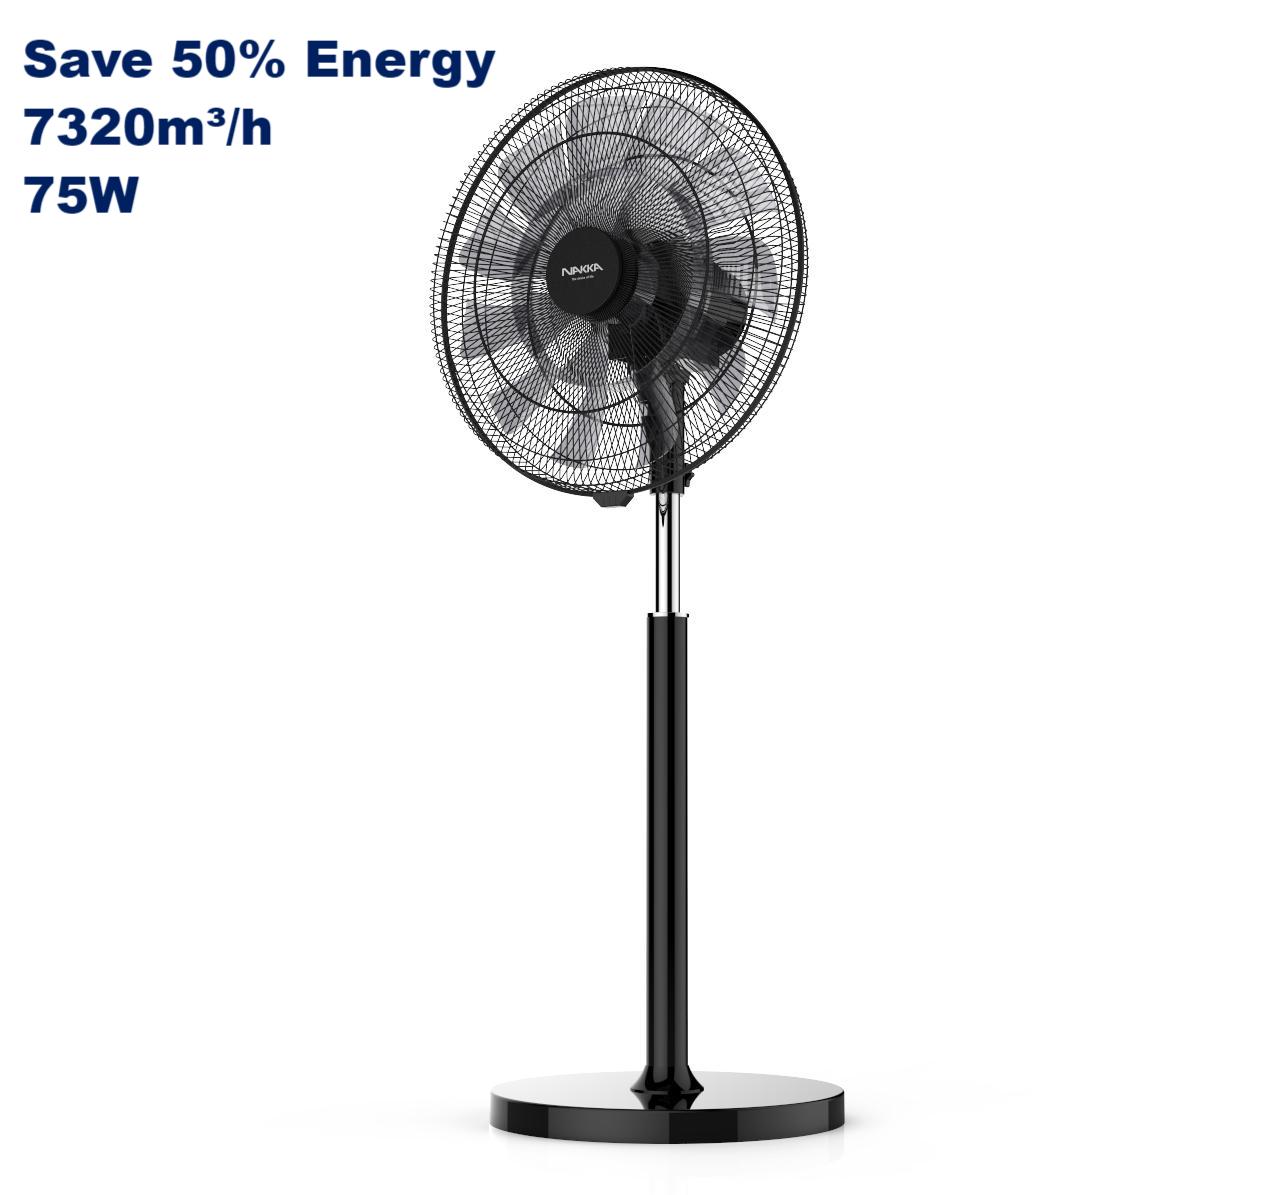 power saving stand fan